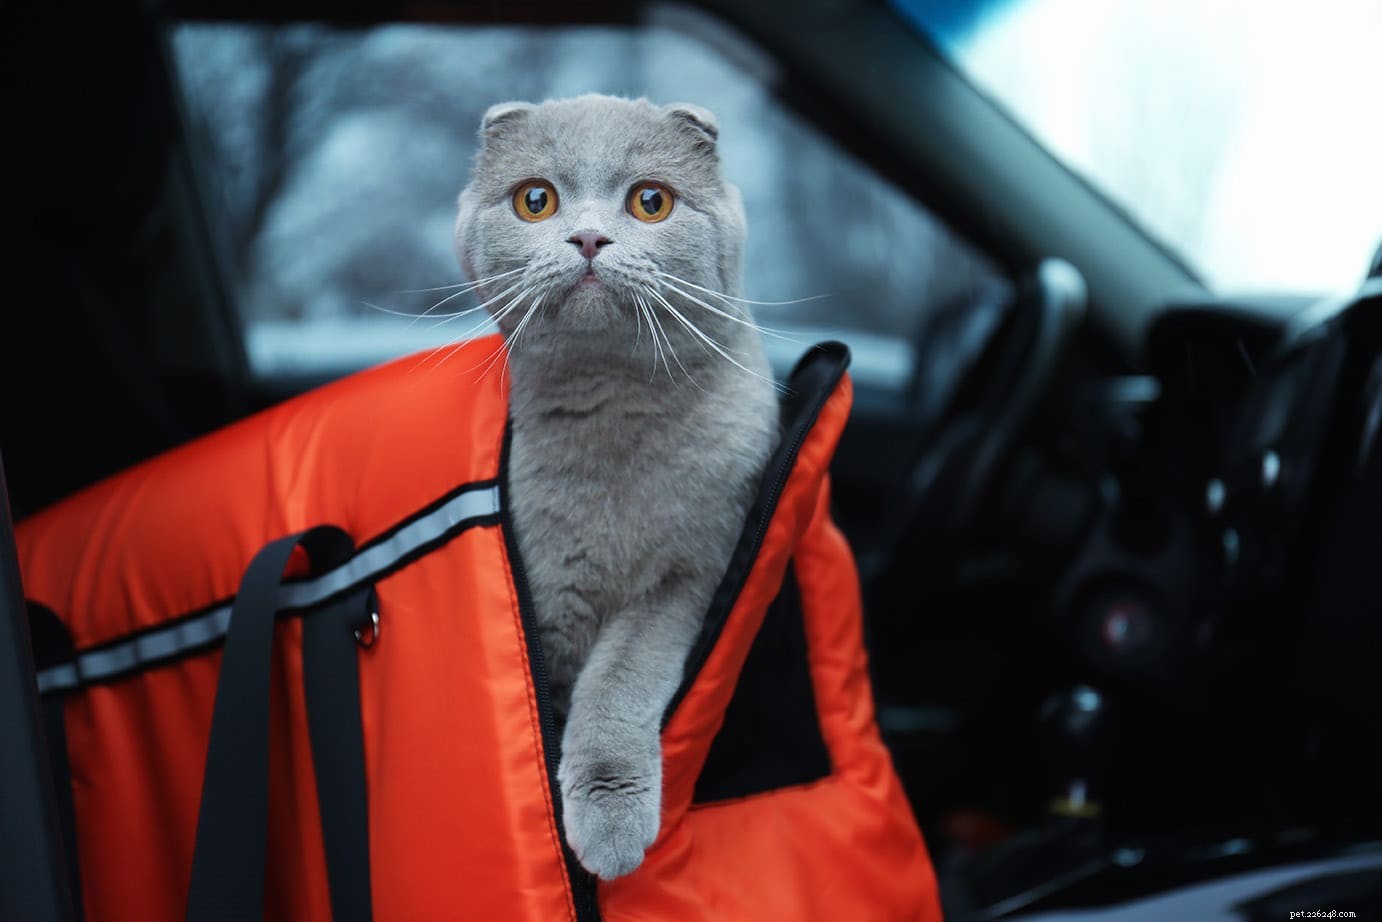 Como acalmar um gato no carro (8 métodos comprovados)